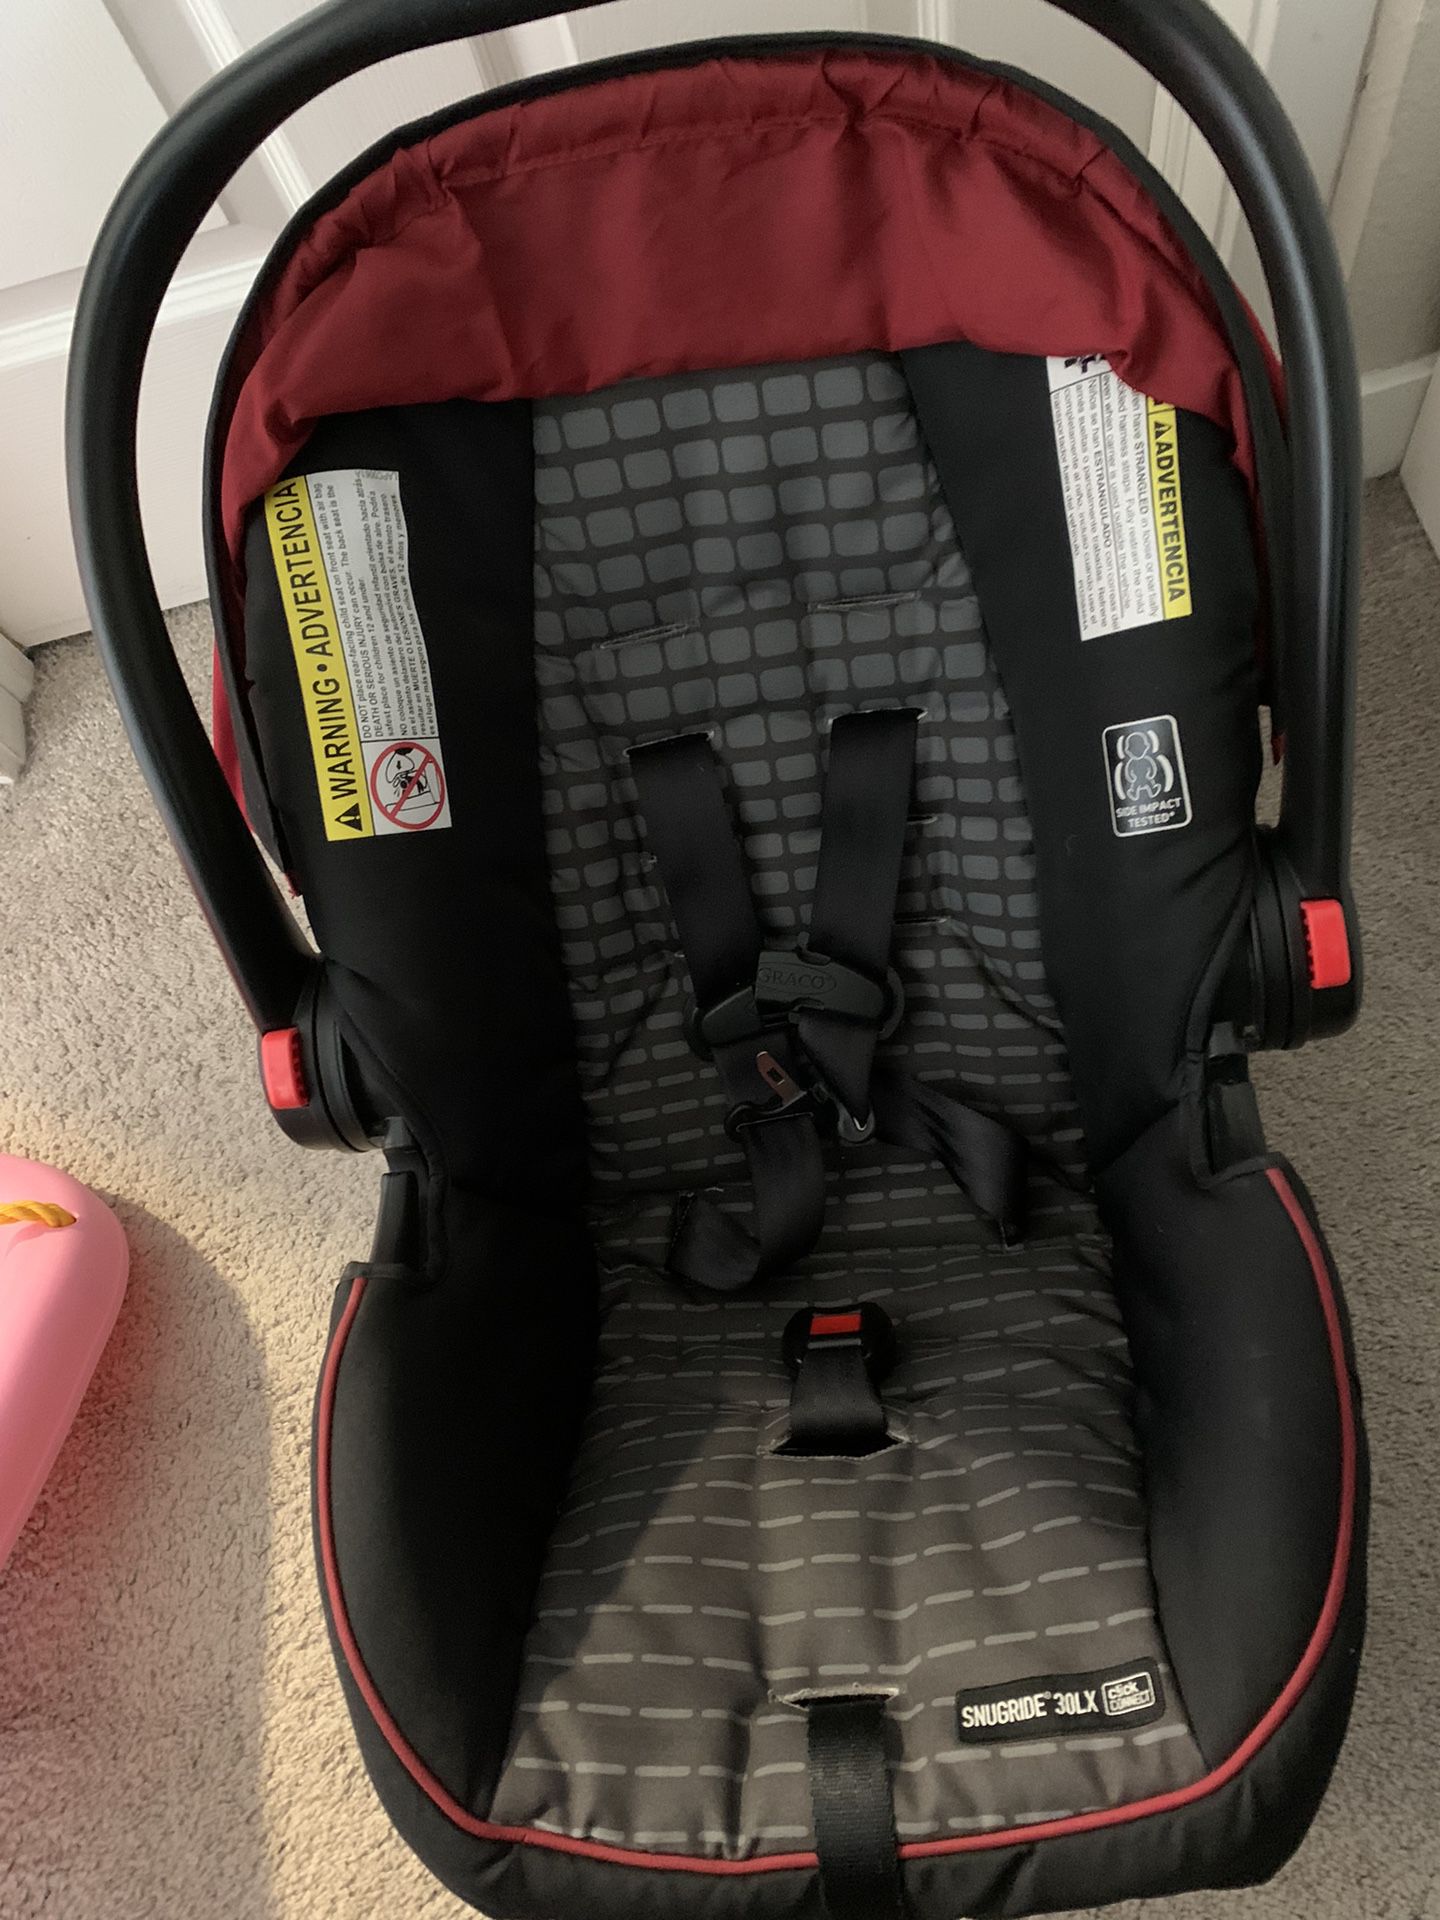 Free Graco Infant Car seat 